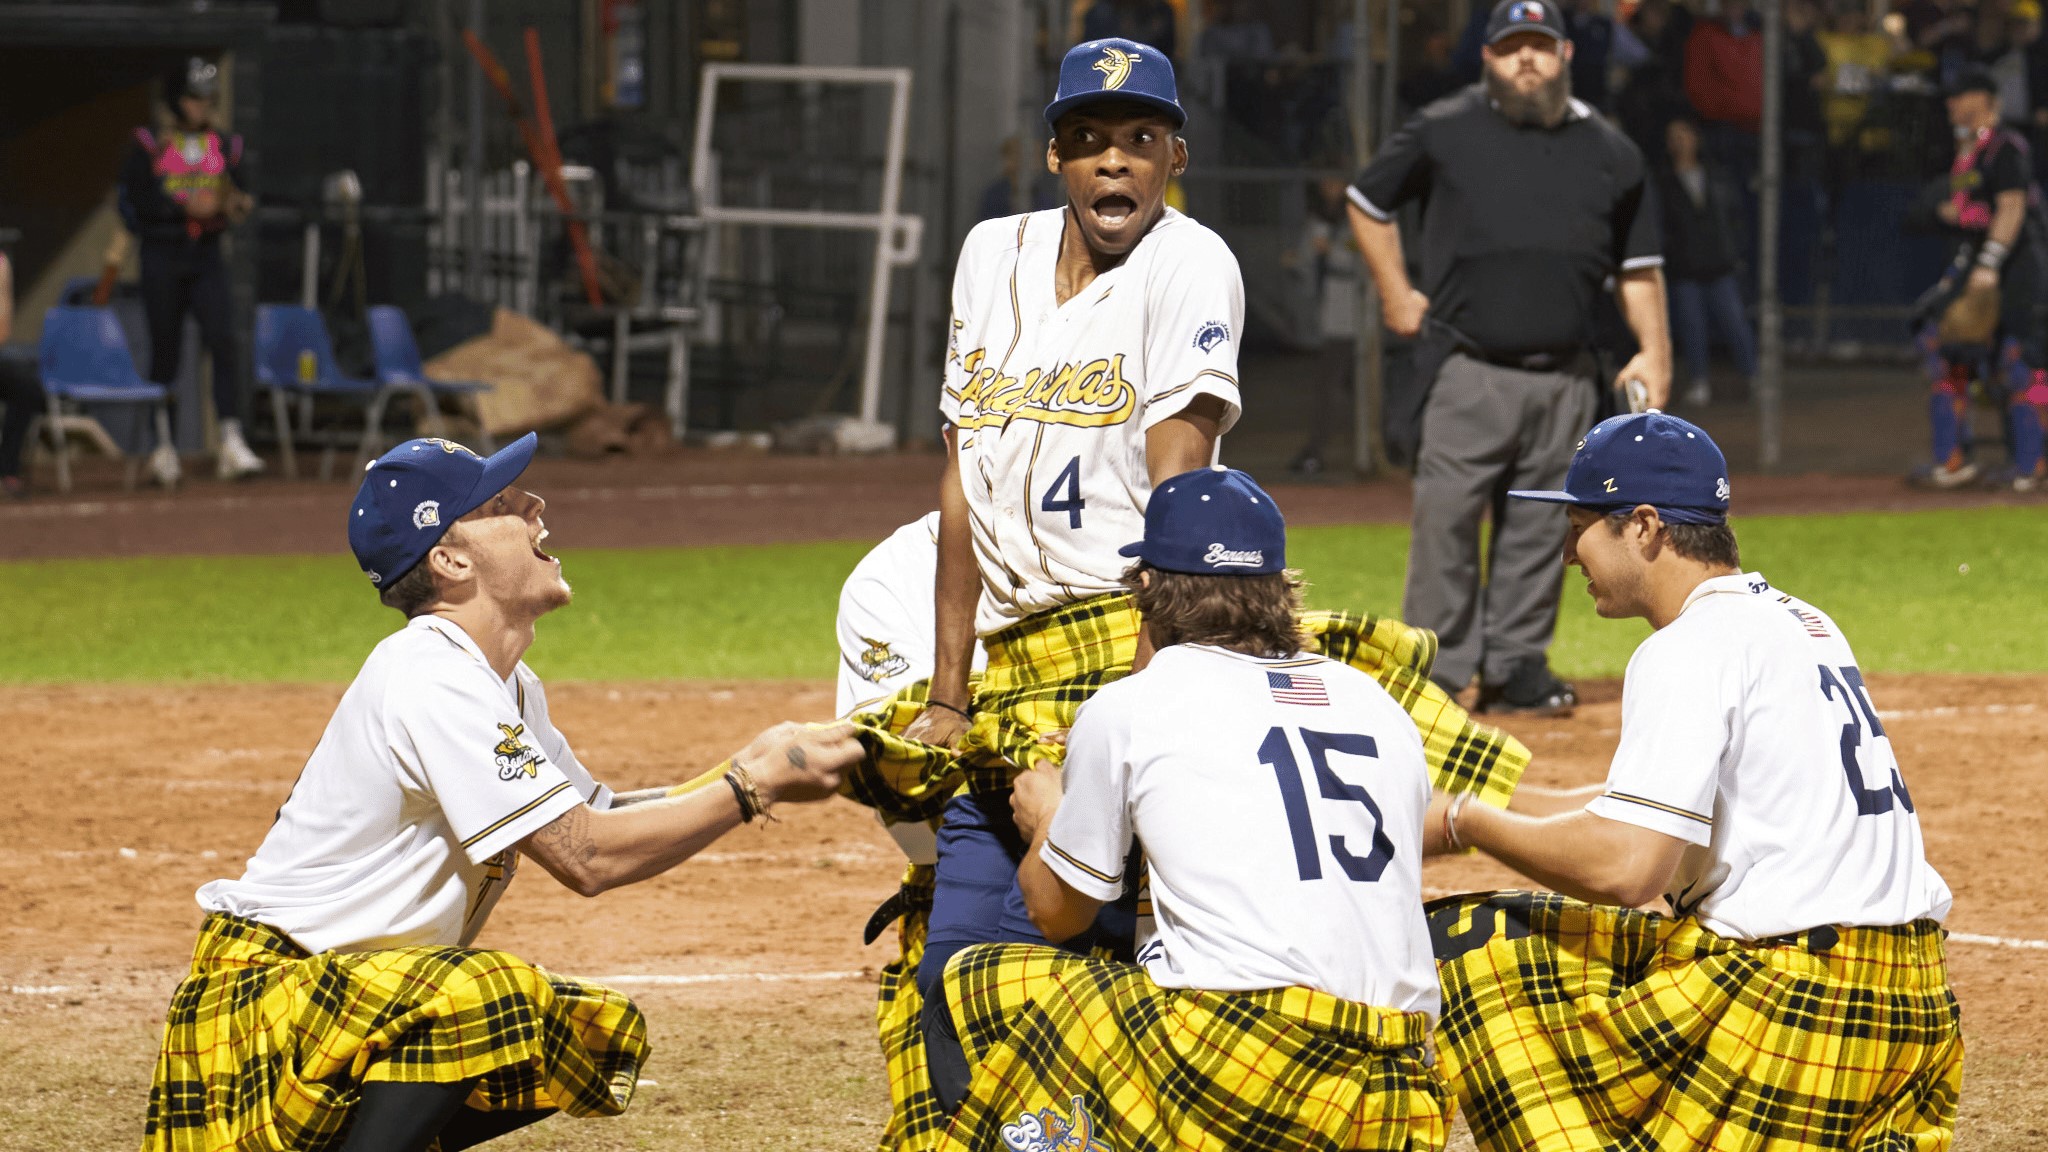 Savannah Bananas Baseball Games To Appear On NESN Next TV